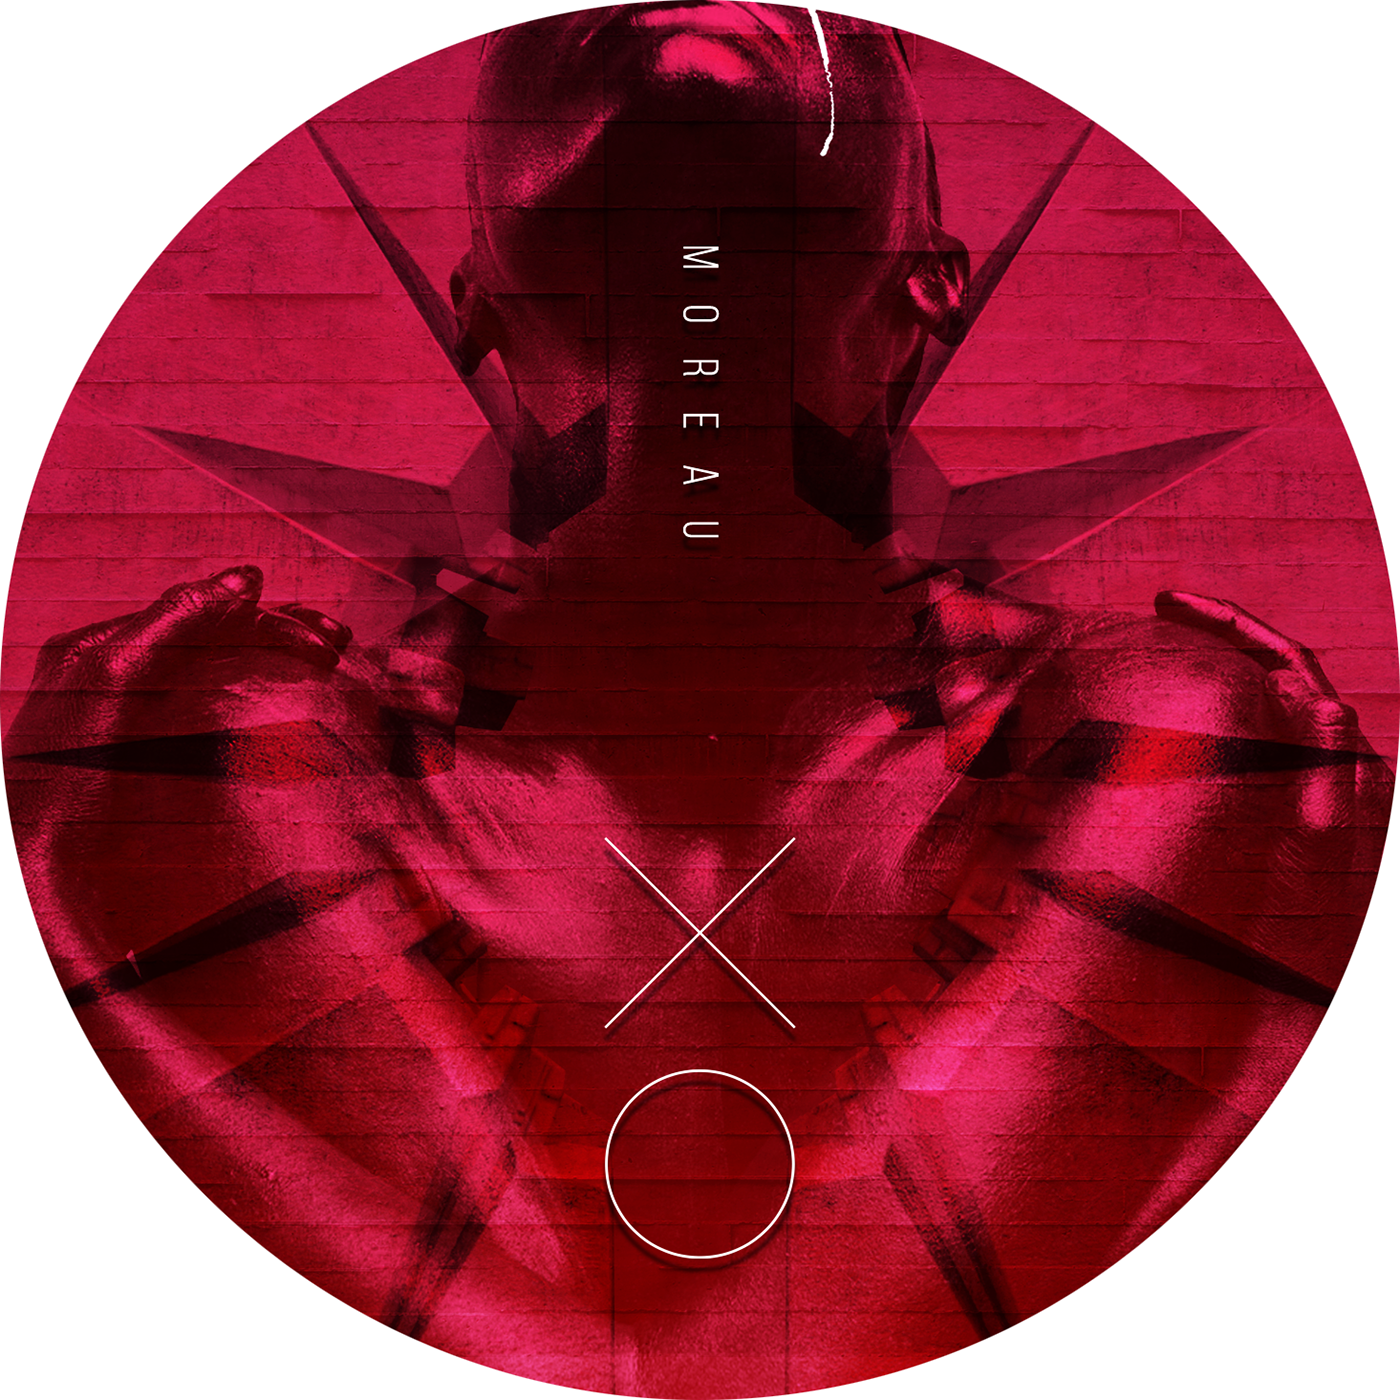 xo Album electronic music architecture modernism graphic design album cover visual concept